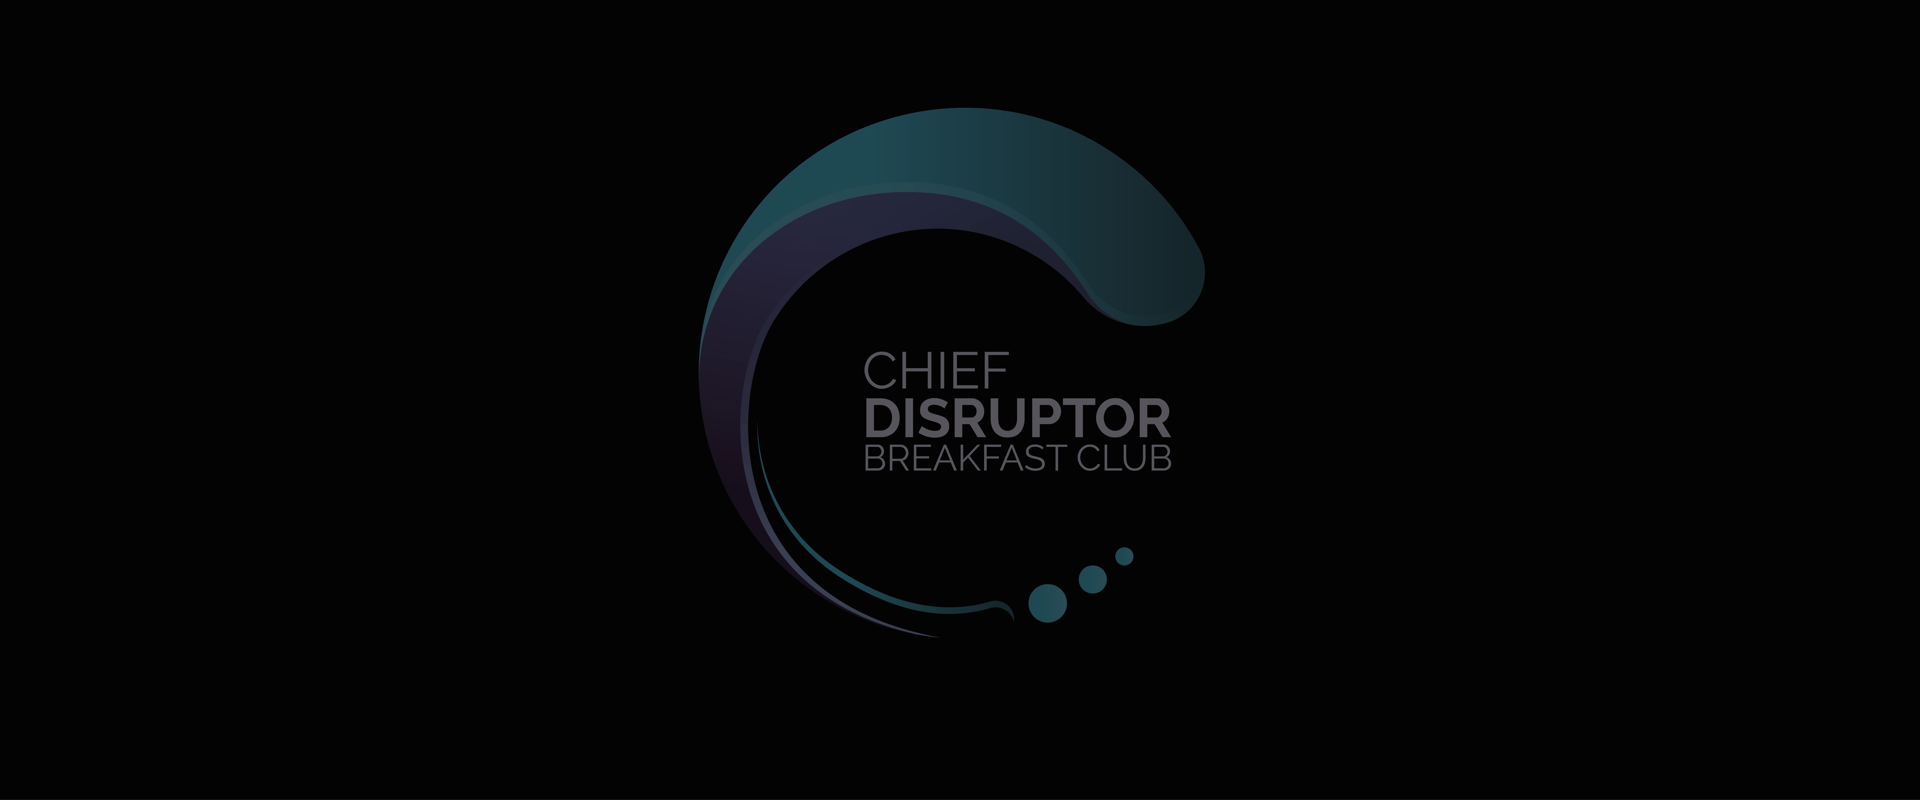 Chief Disruptor Breakfast Club - Registration Form